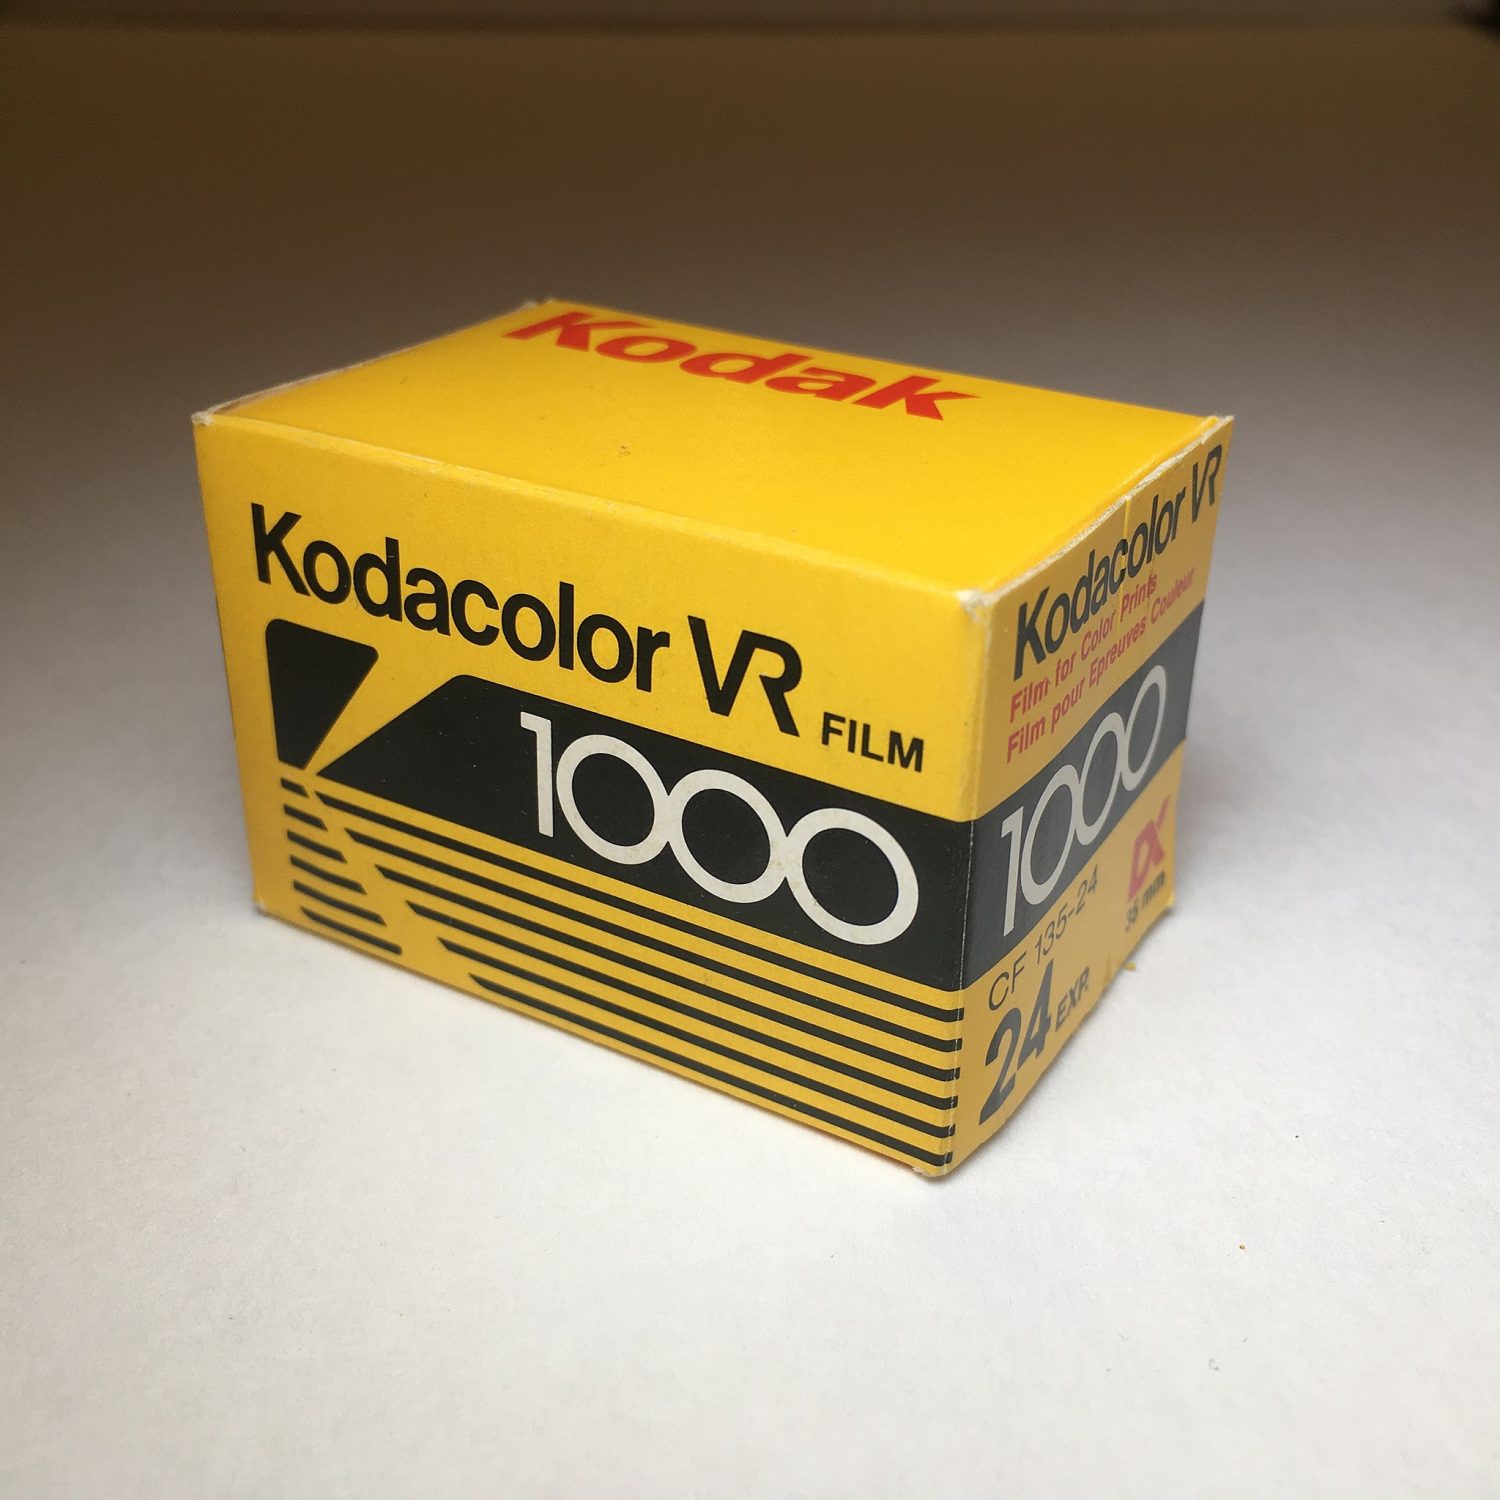 Kodacolor VR 1000 film box (Photo: Thistle33/Wikimedia Commons)